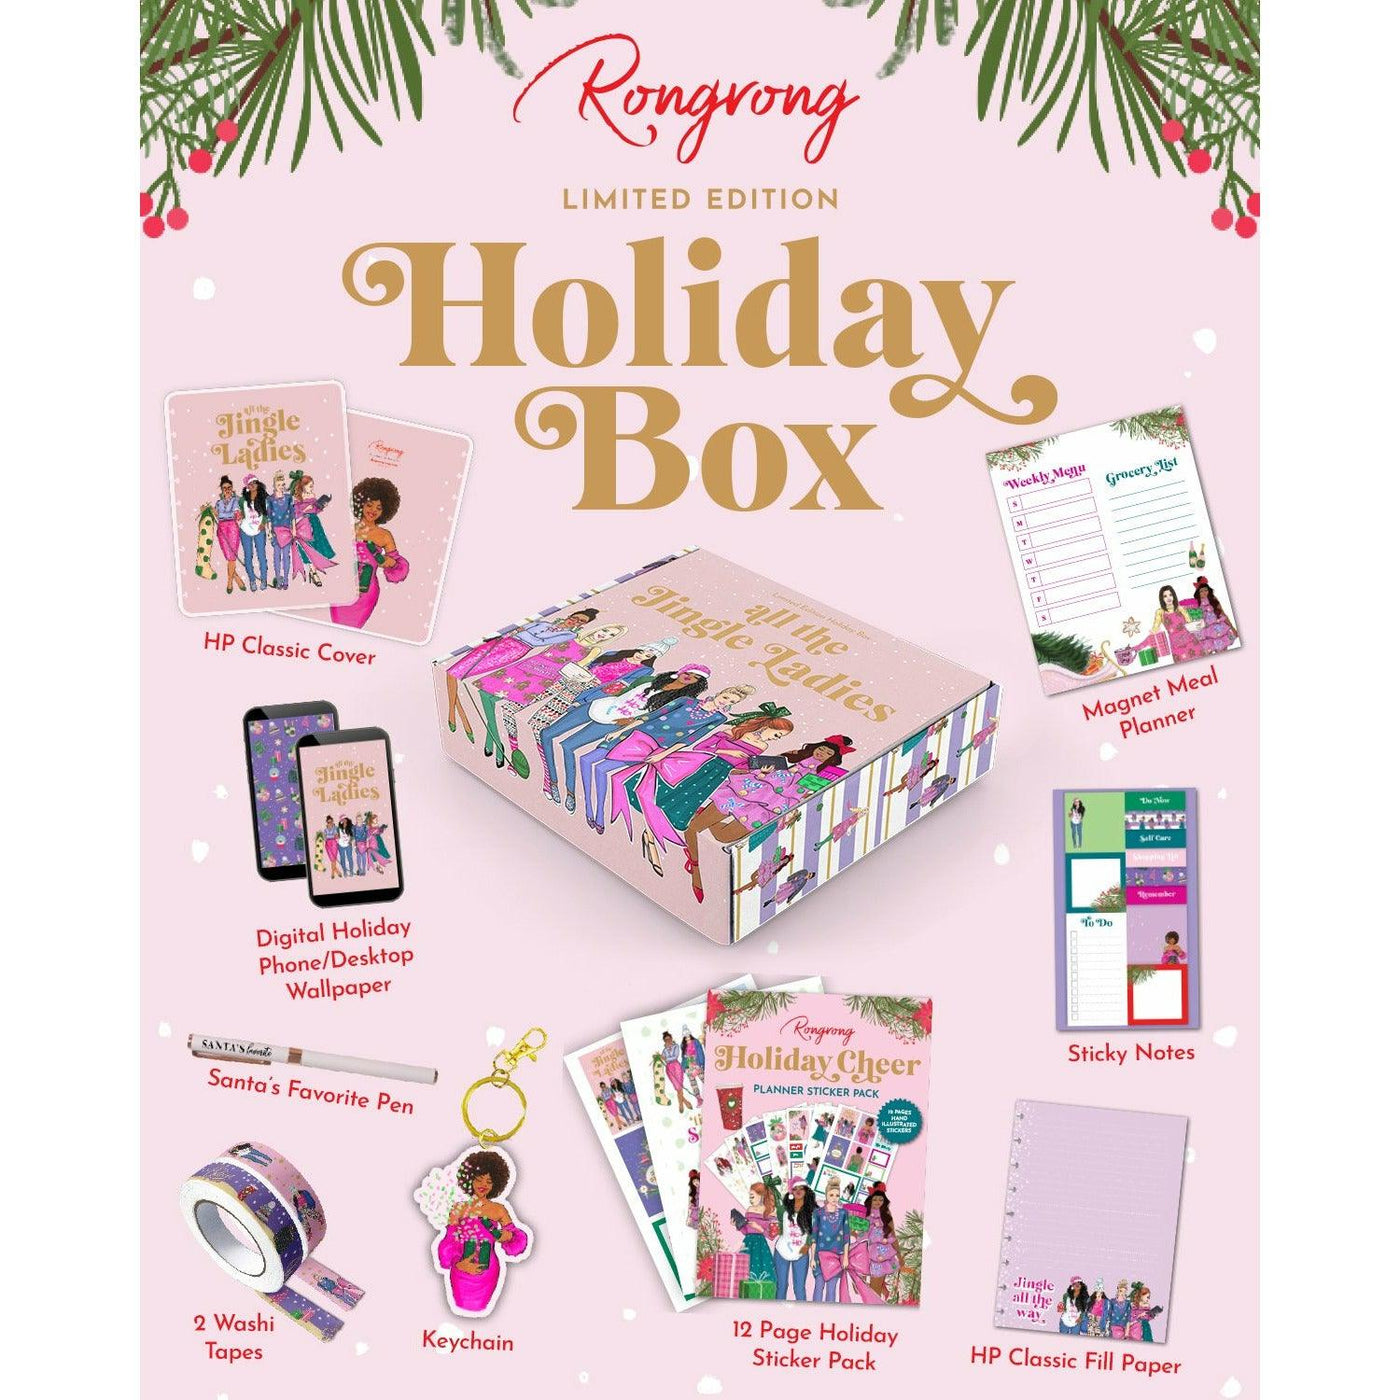 Limited Edition Rongrong Holiday Box - 2021 - PRE-ORDER - Shop Rongrong